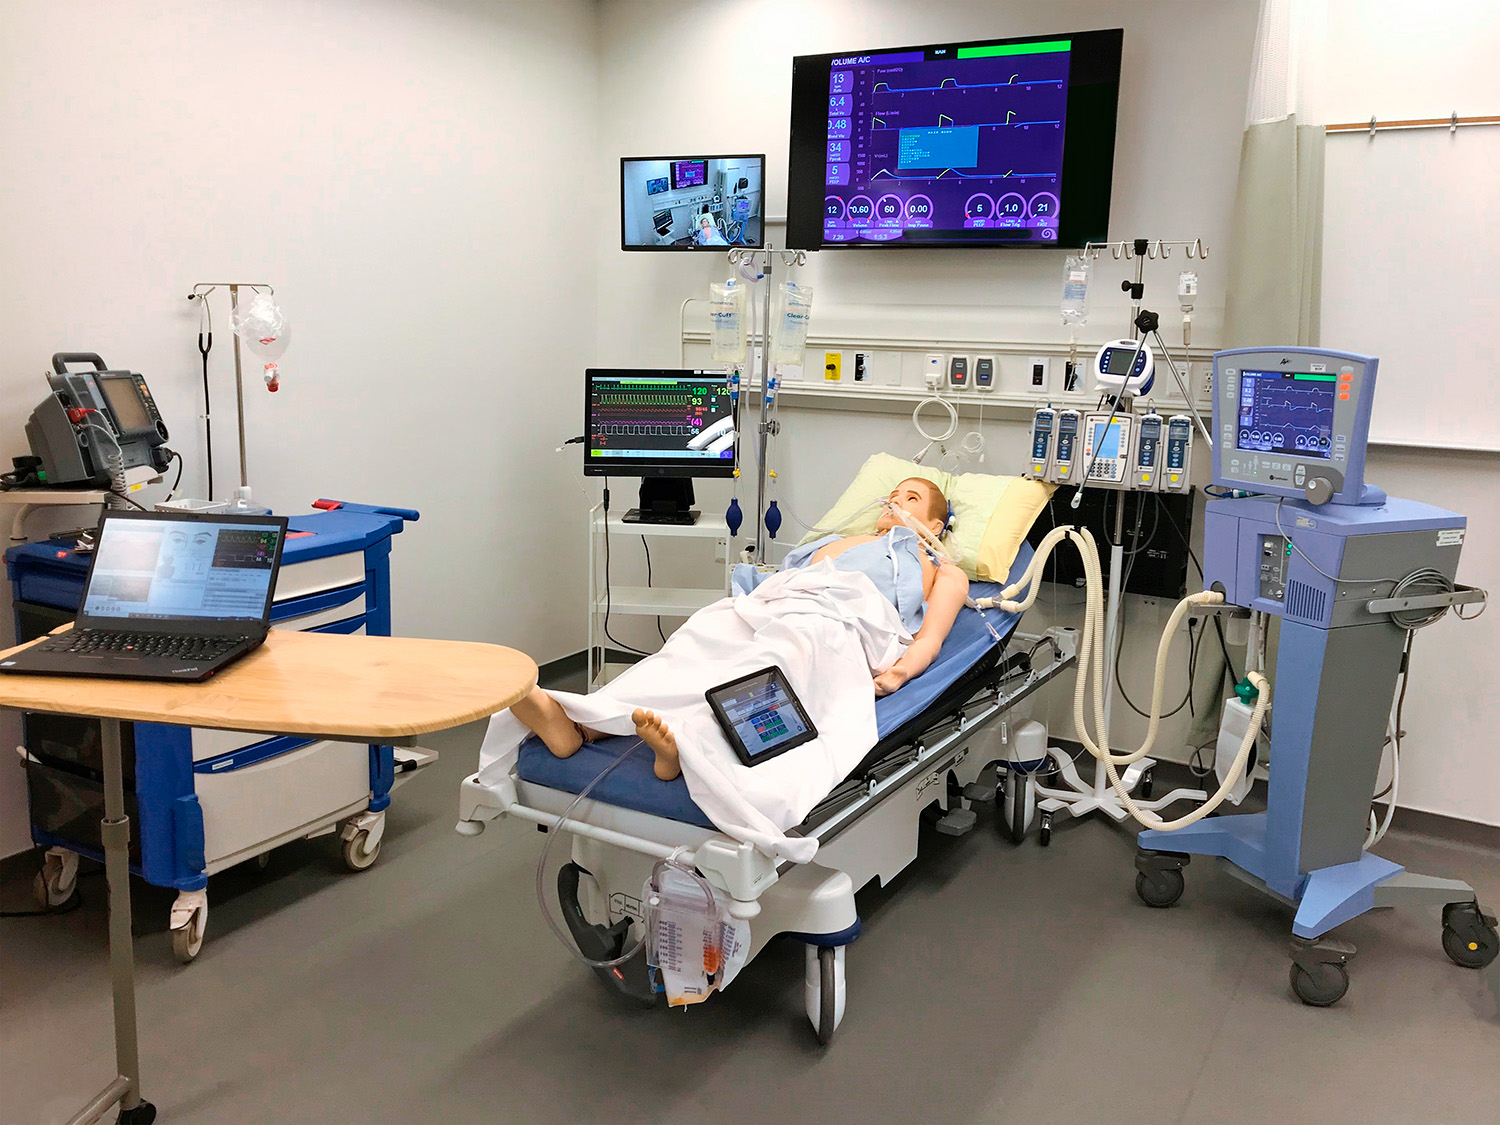 Ciertas zonas están configuradas para enseñar procedimientos médicos específicos, como esta estación de cama con respirador.